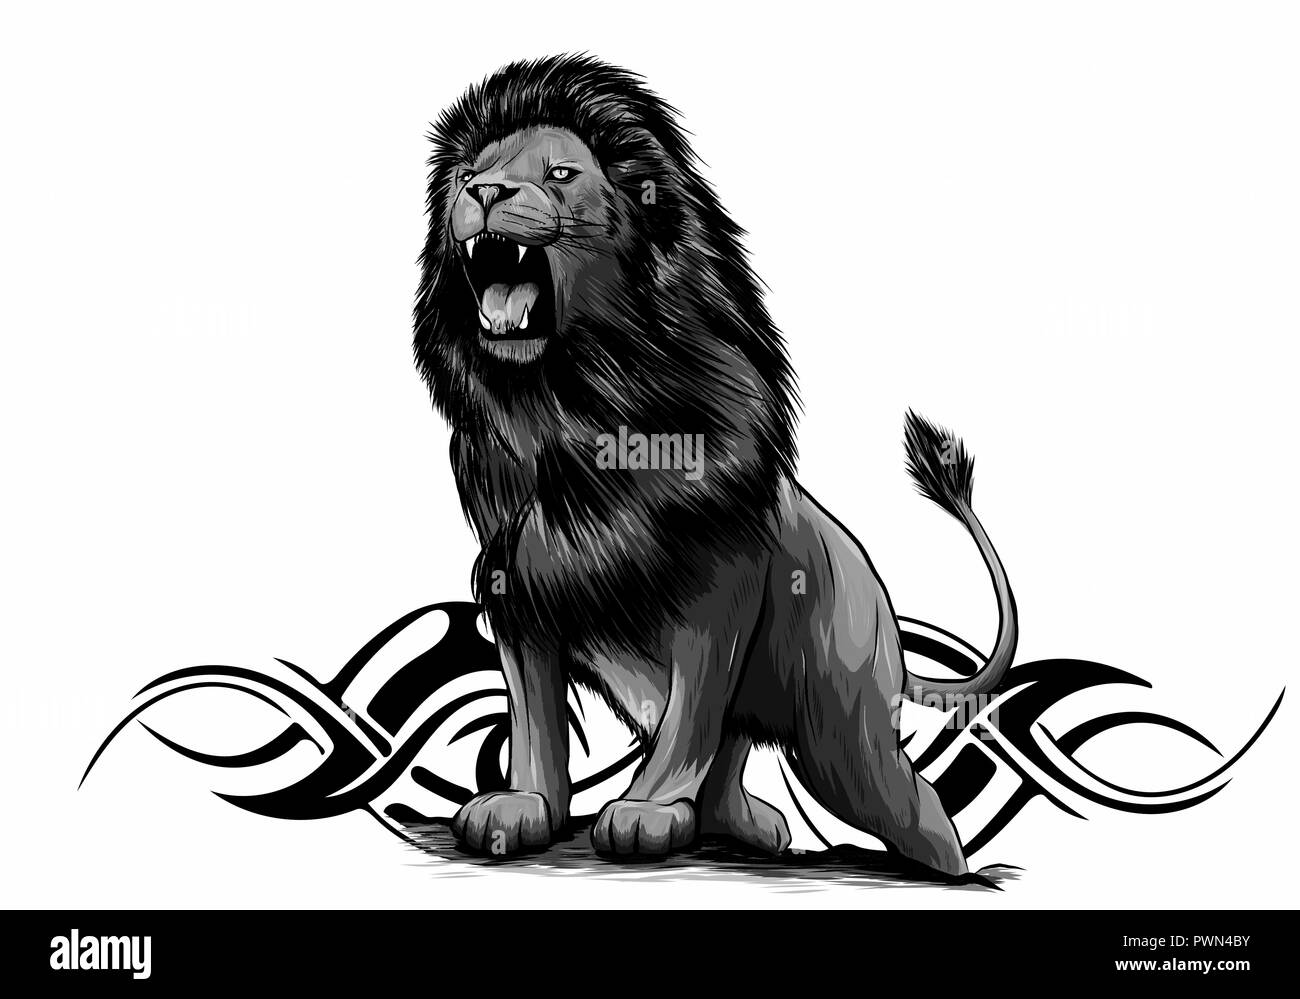 Simple Line Art Lion Jumping Stock Illustration 1499837156 | Shutterstock